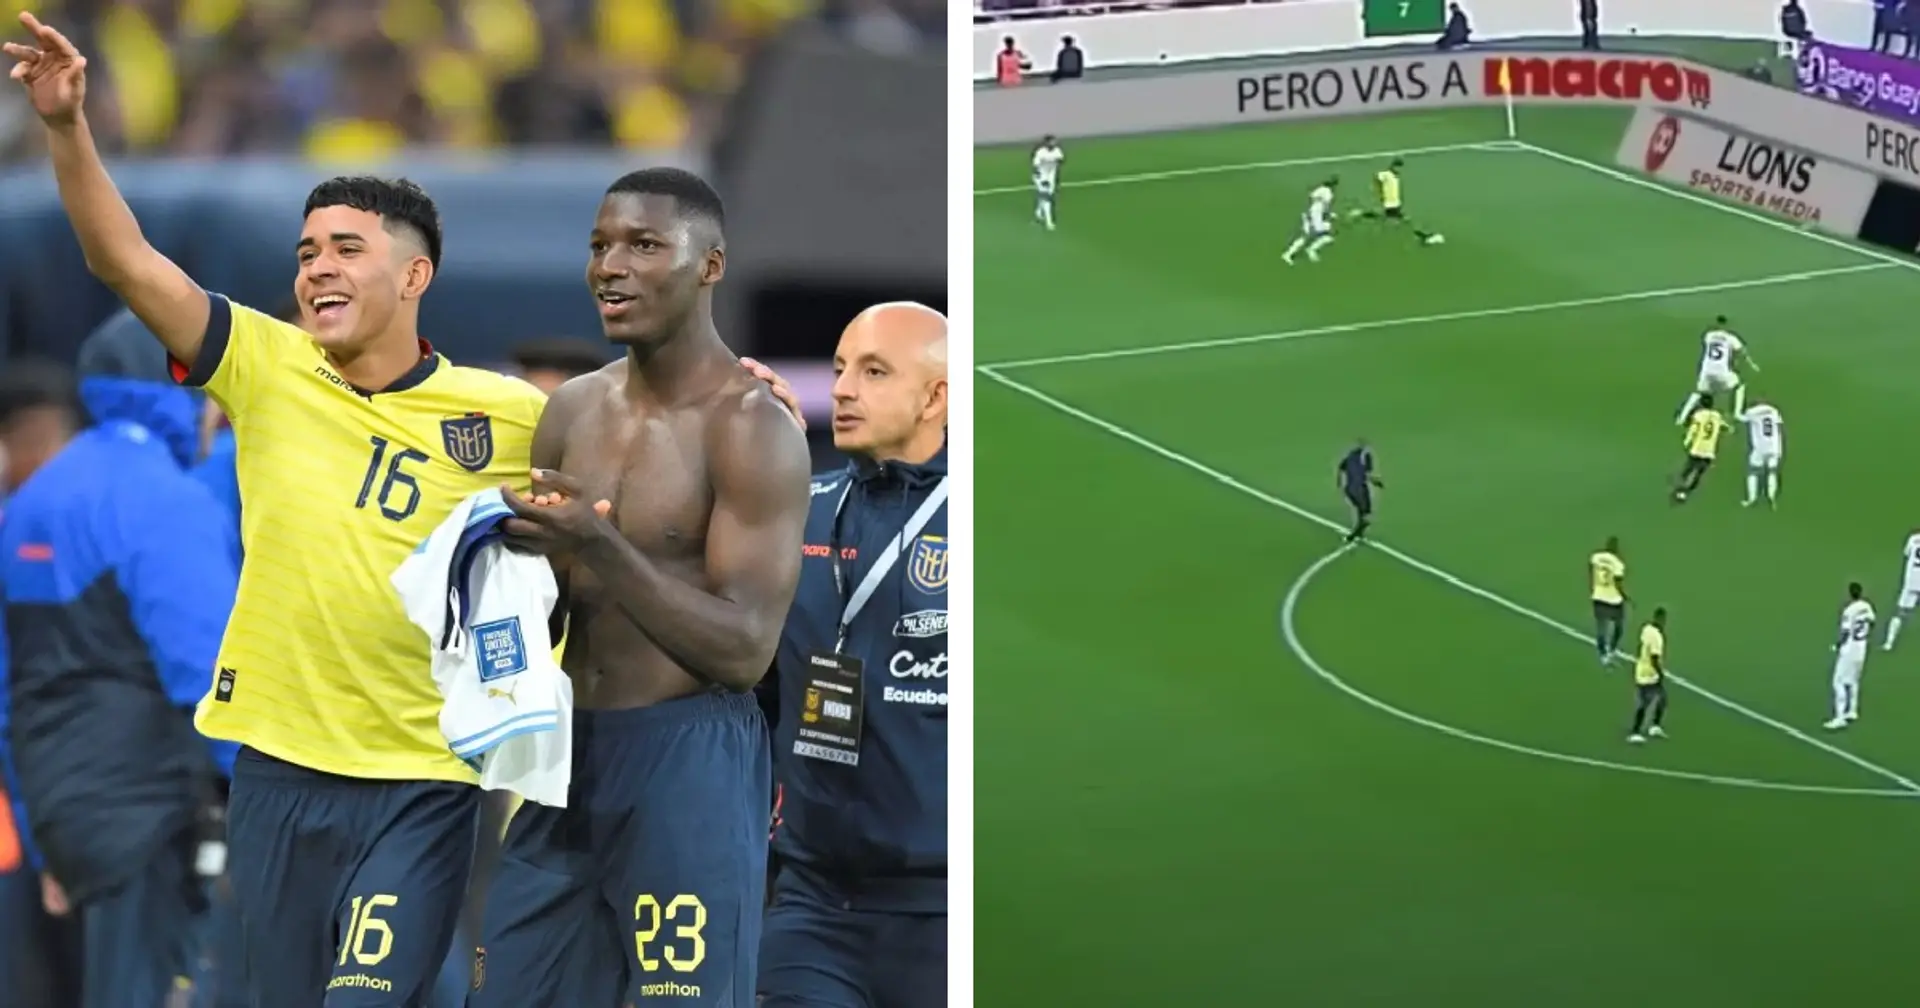 Watch Chelsea boys Caicedo and Paez claim assists to help Ecuador beat Uruguay 2-1 (video)